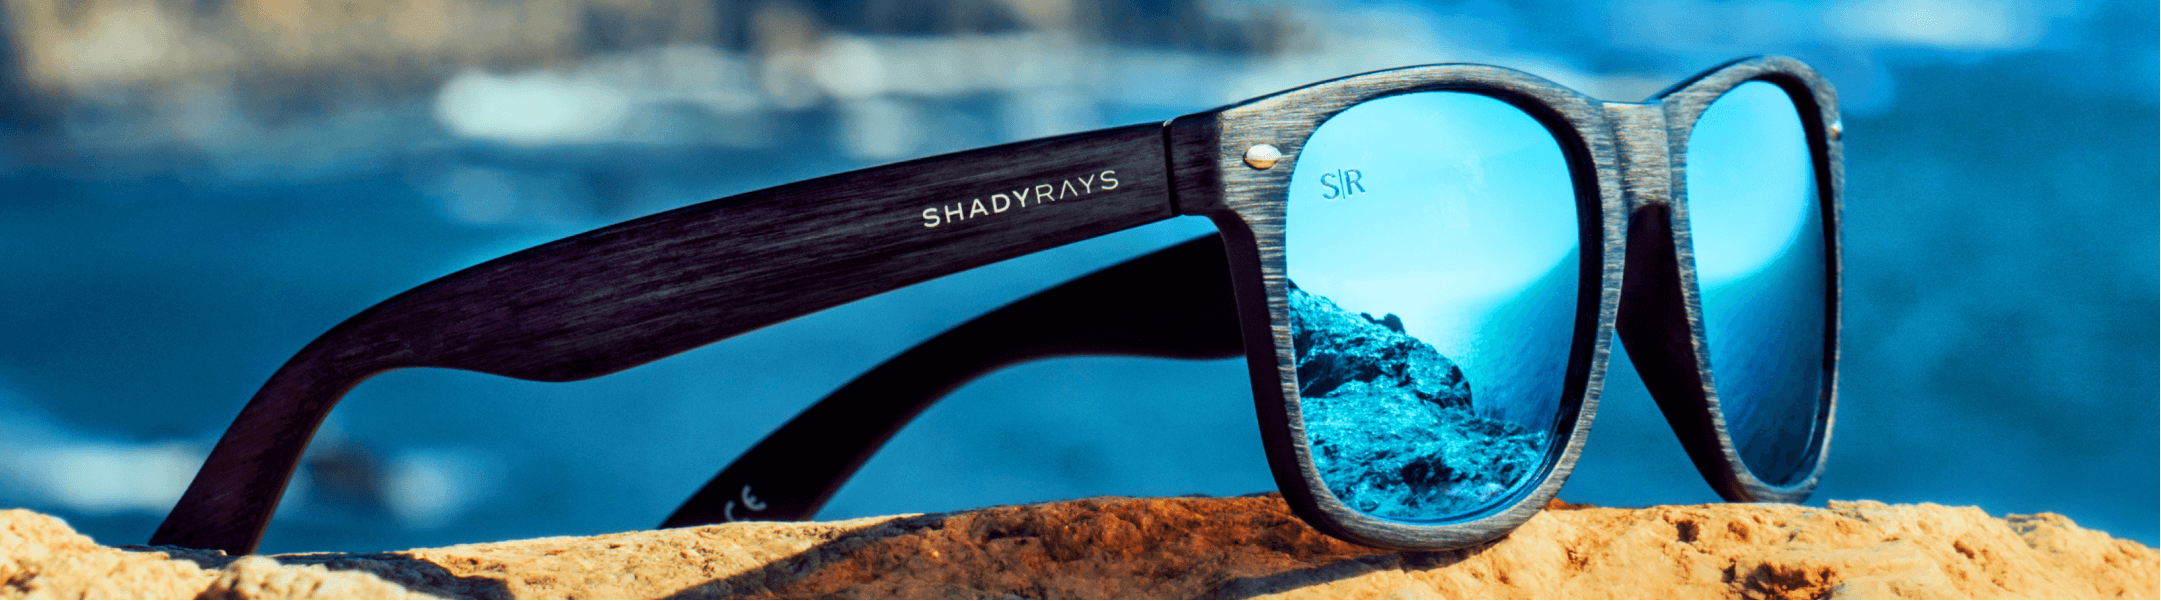 Let's Talk Shady Rays Sunglasses #shadyrays 